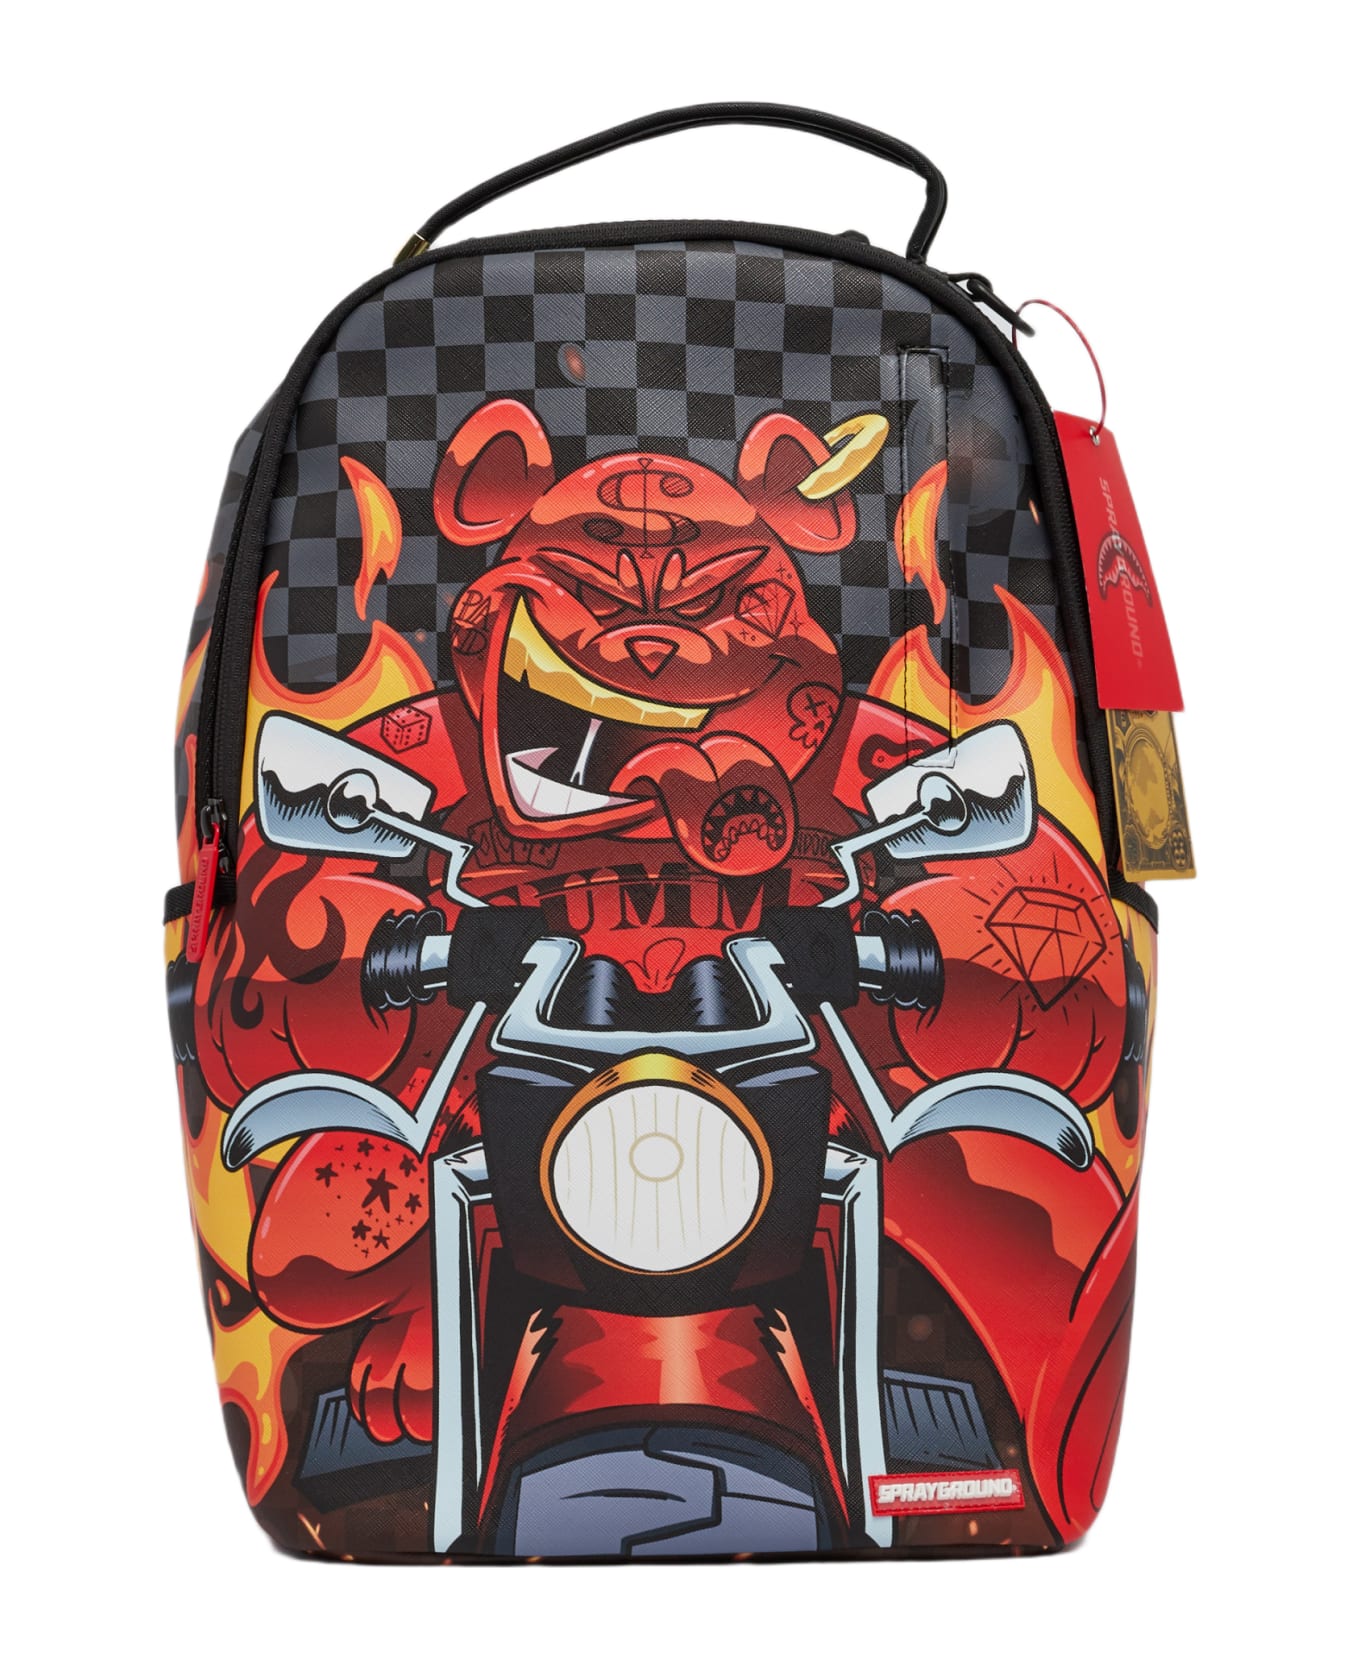 Sprayground Diablo Rider Shark Backpack Backpack - NERO-ROSSO